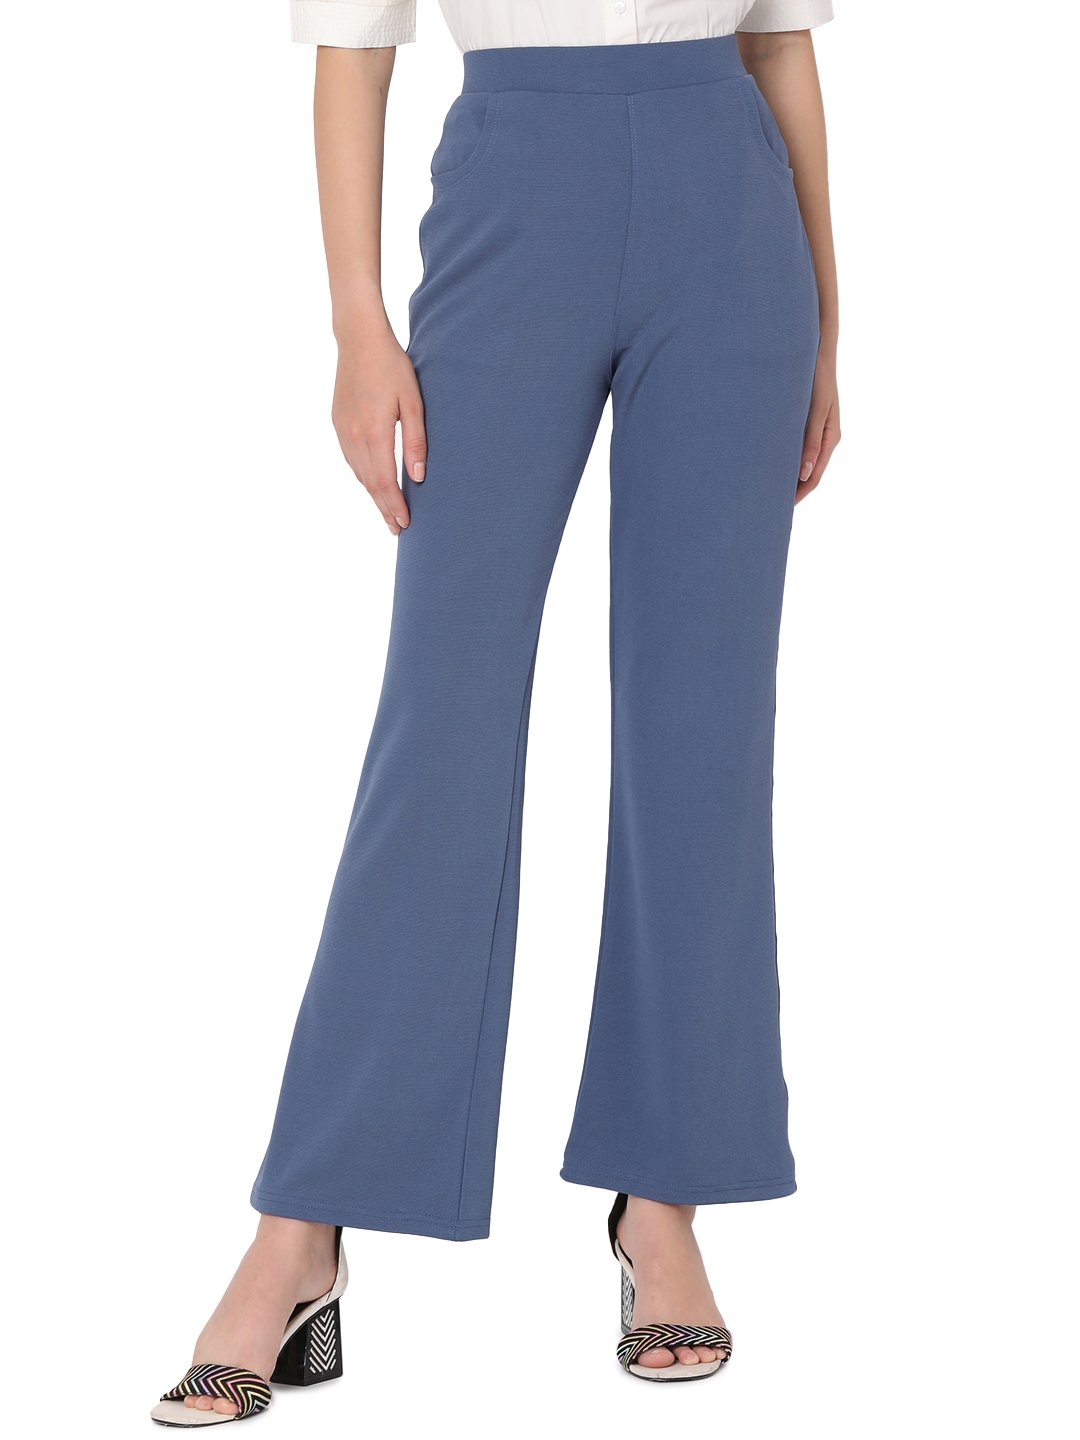 Smarty Pants | Smarty Pants women's cotton lycra bell bottom indigo blue formal trouser